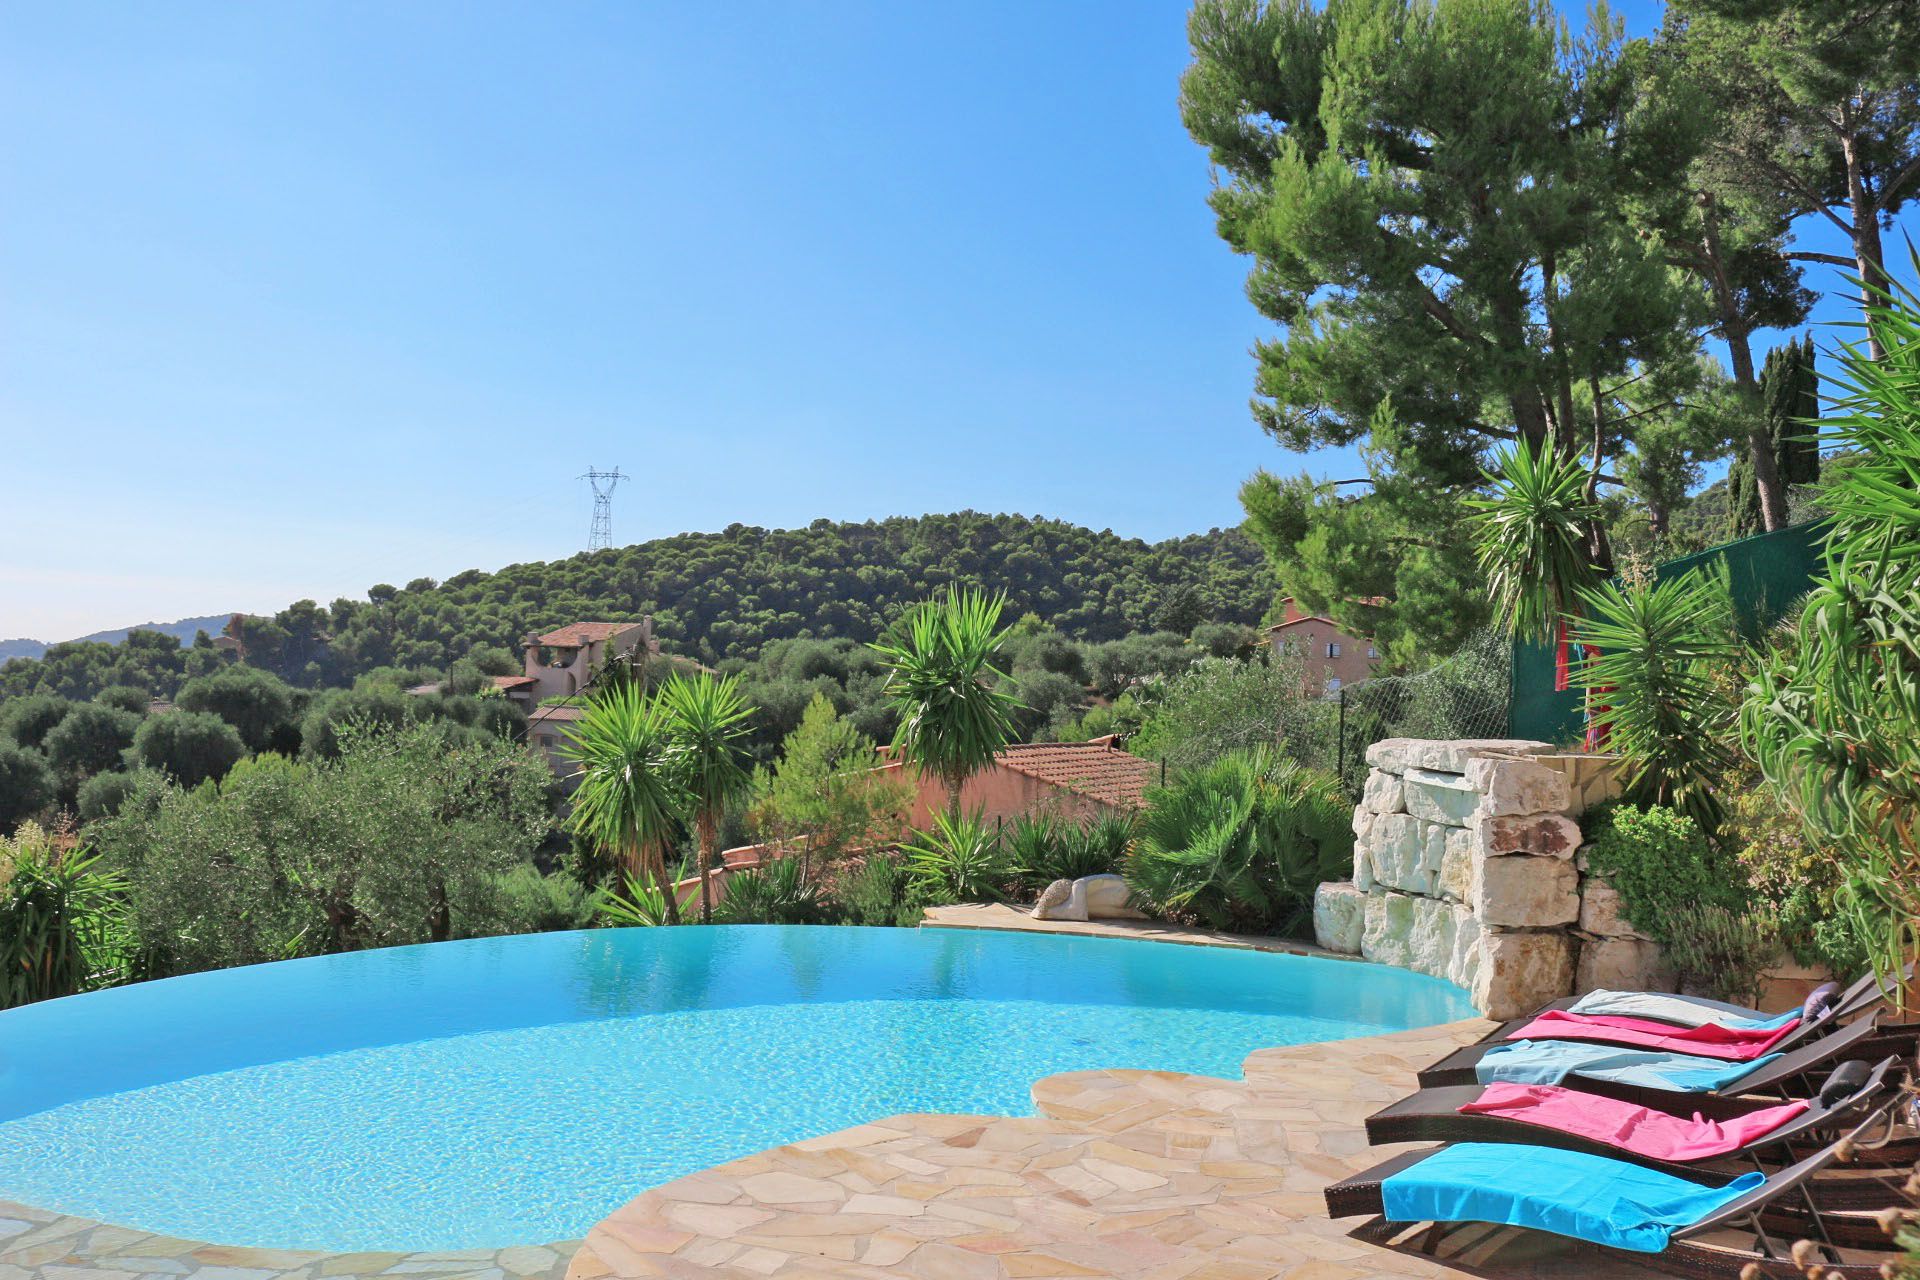 Méditerranée Location Villa with Private pool in Cantaron, Côte d'Azur